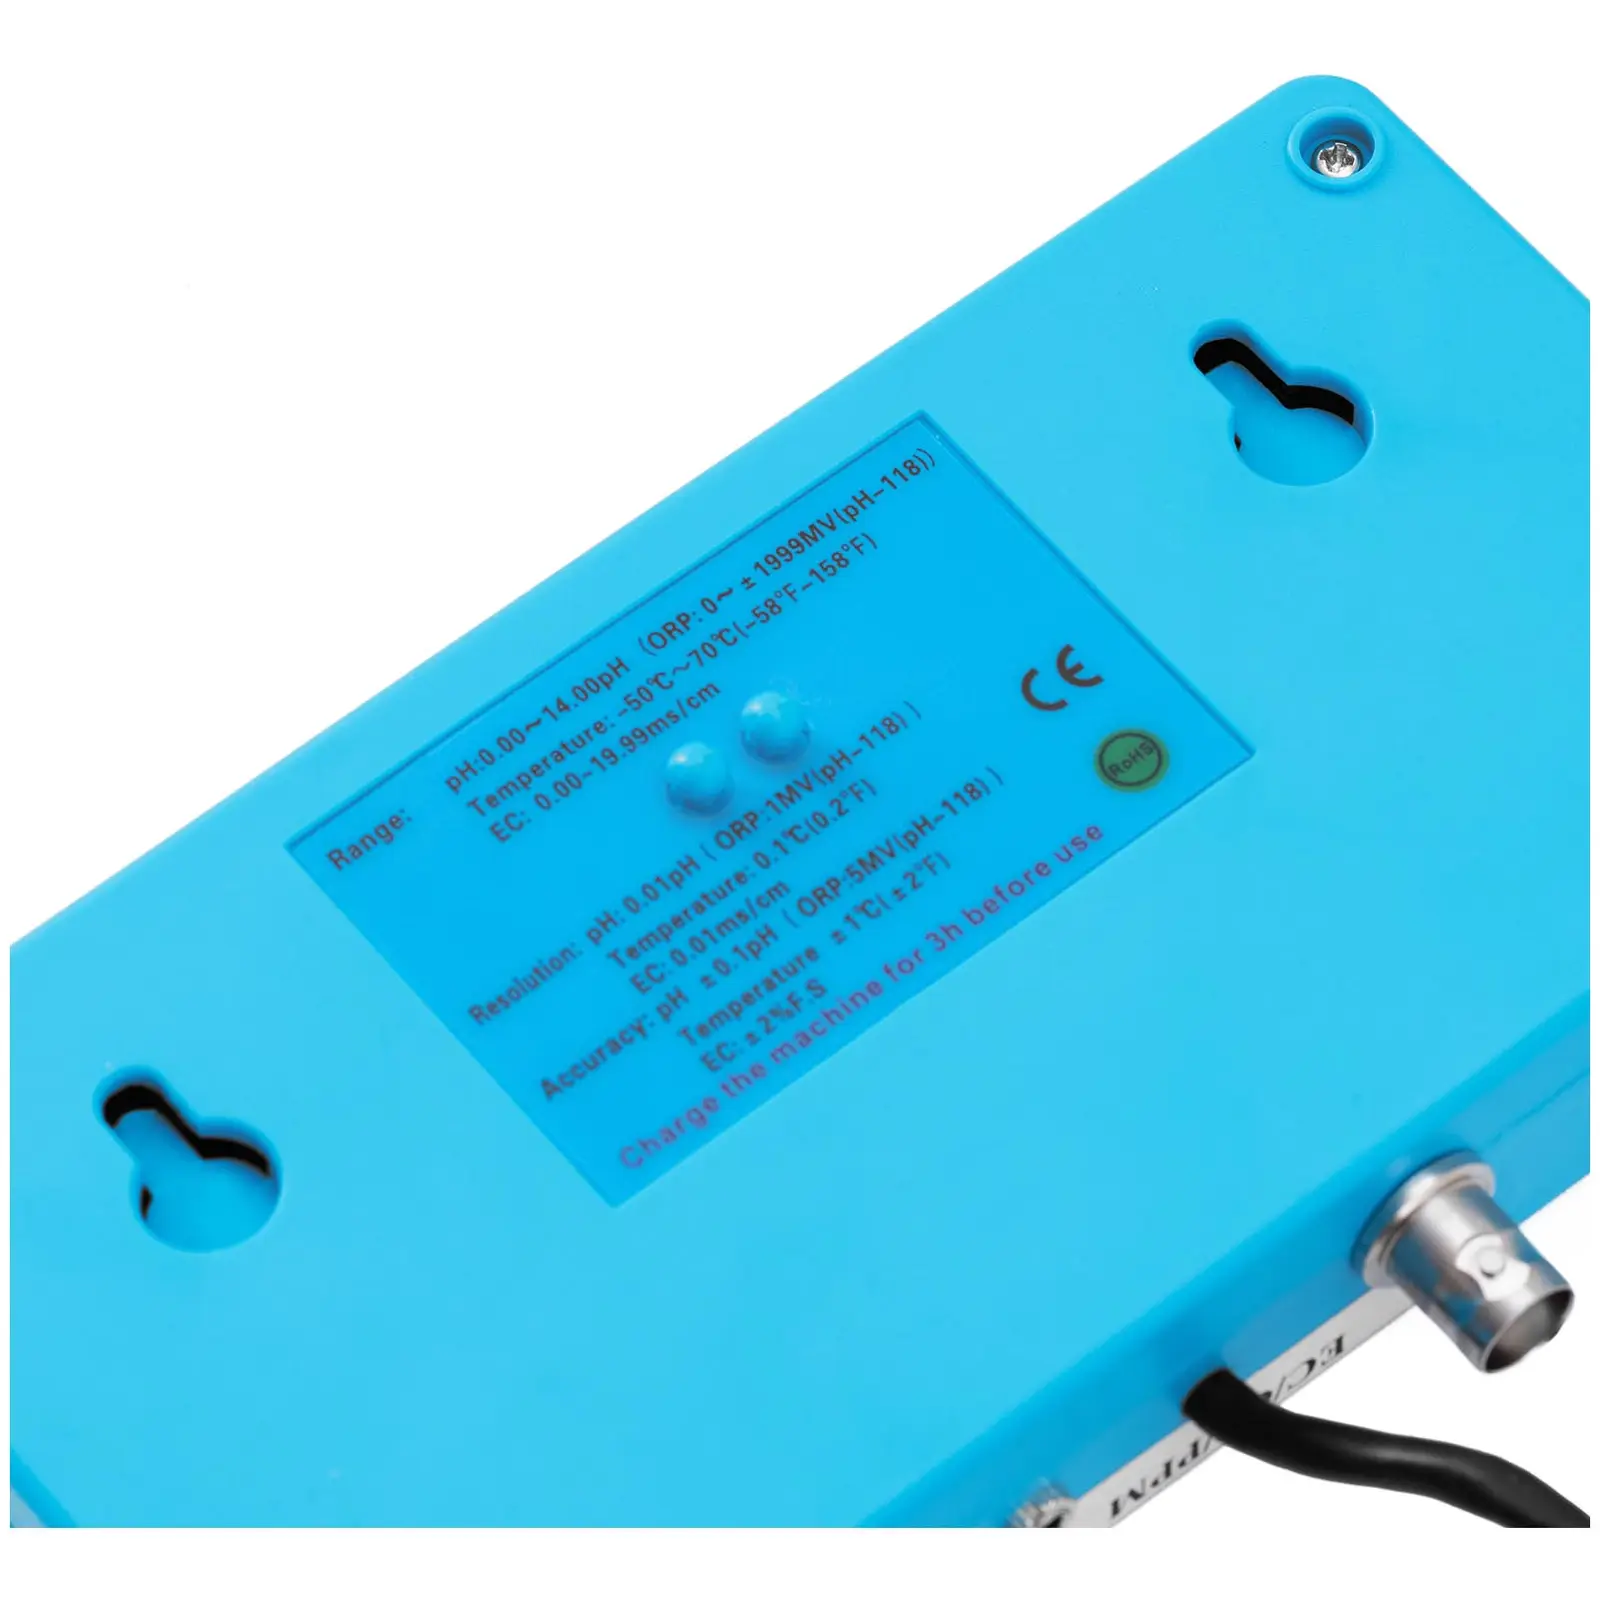 Medidor digital para agua - temperatura - pH - EC - TDS - CF